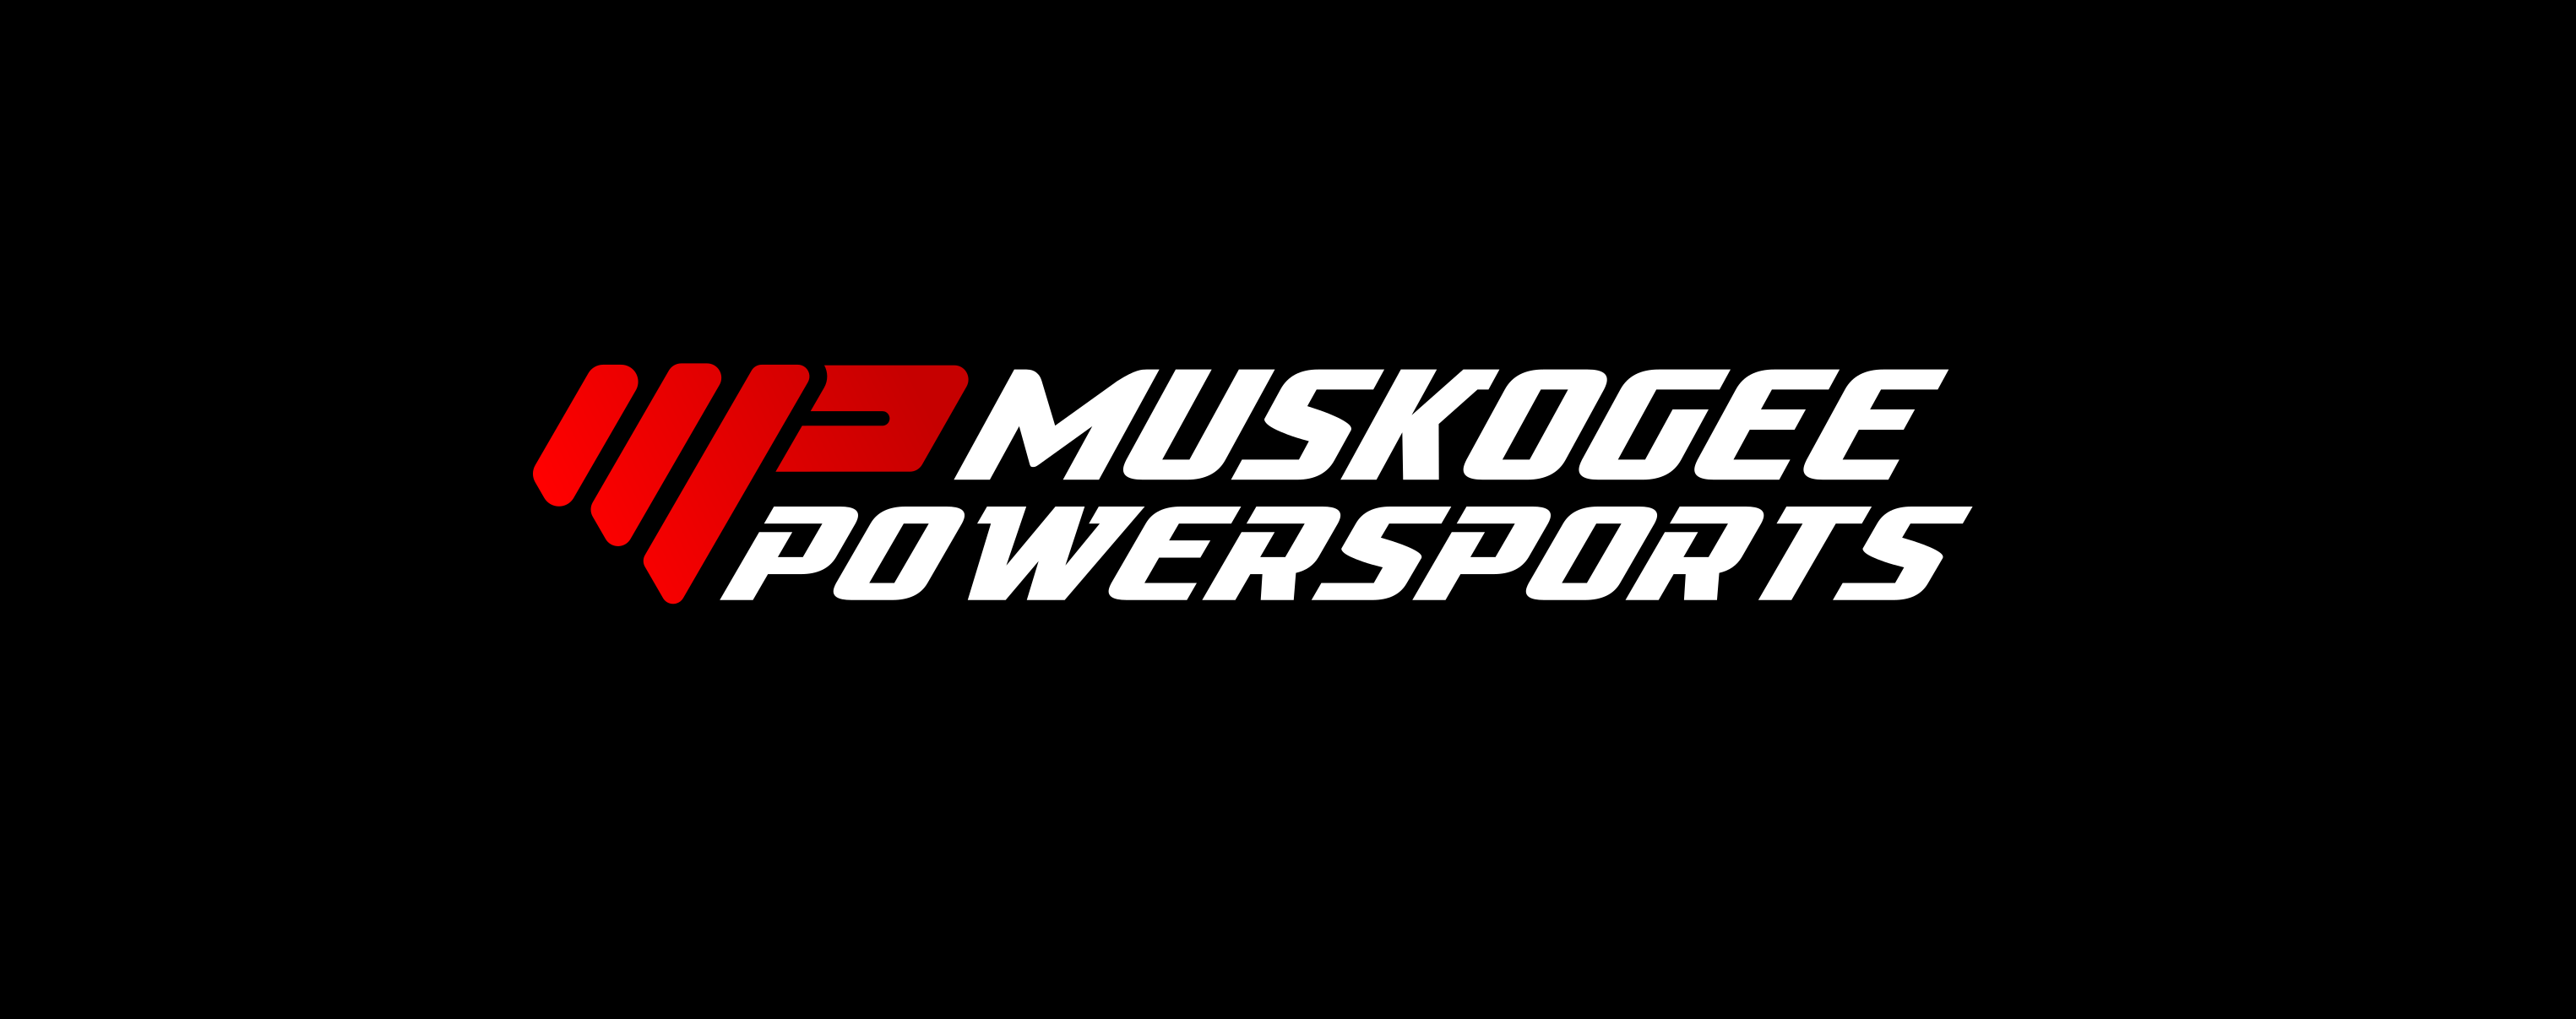 Muskogee Powersports